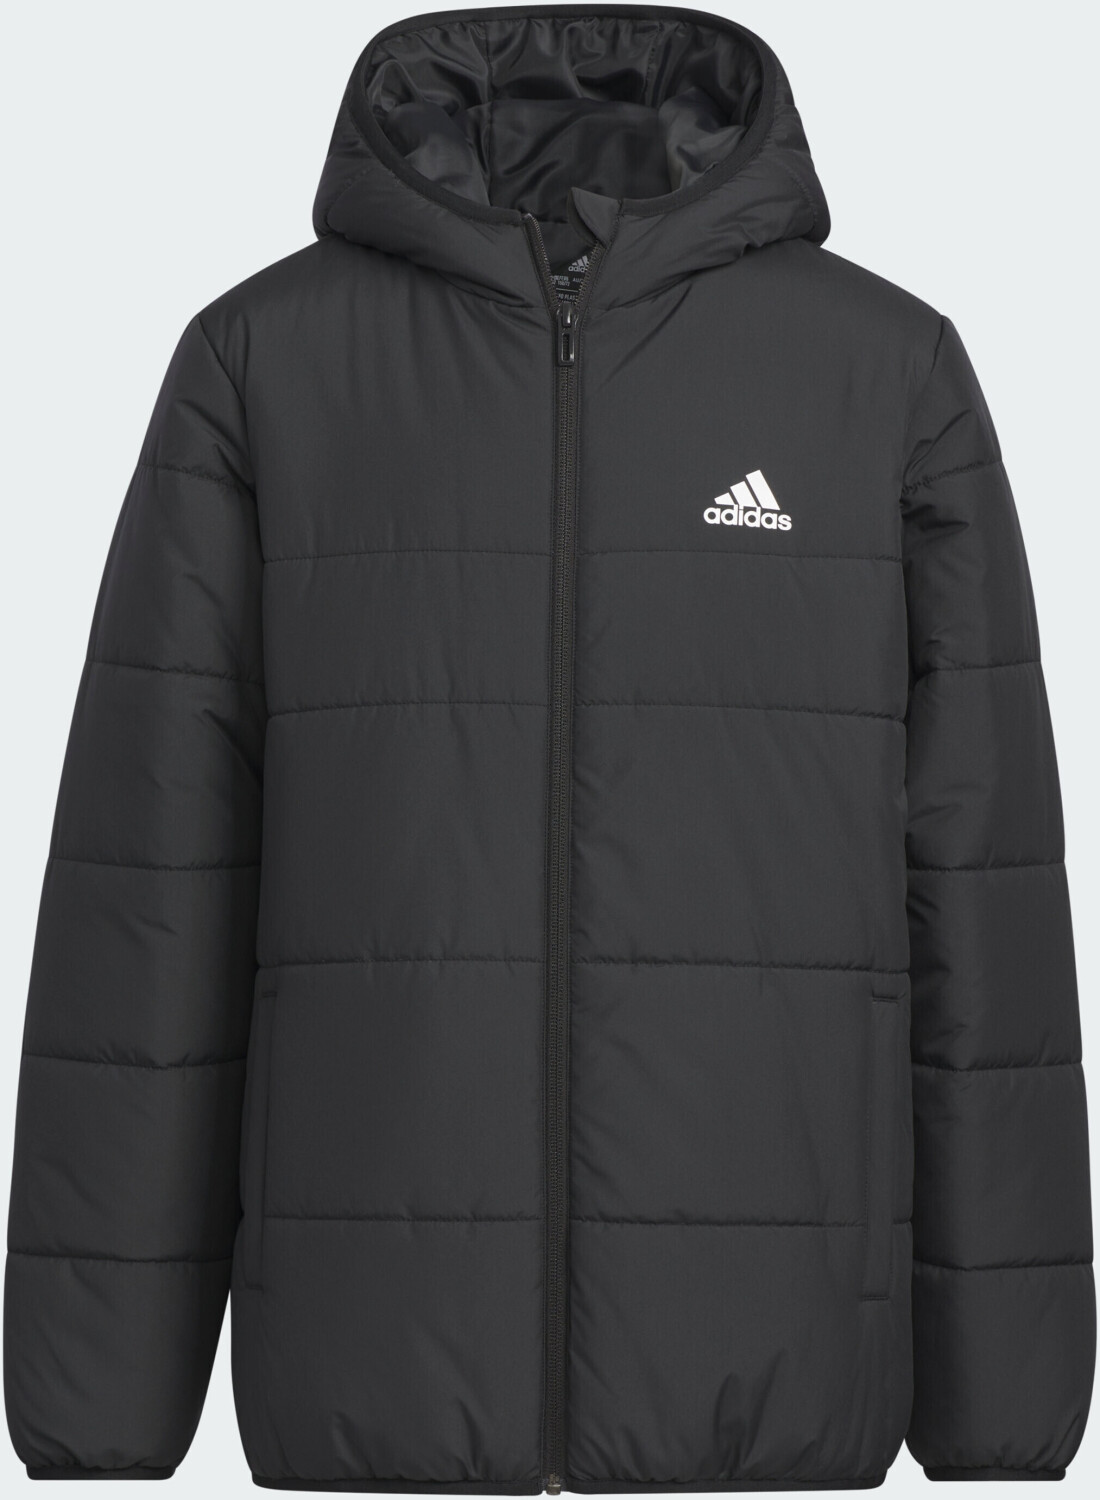 Adidas Padded Kids black € (IL6073) Jacket 44,80 Preisvergleich bei ab 